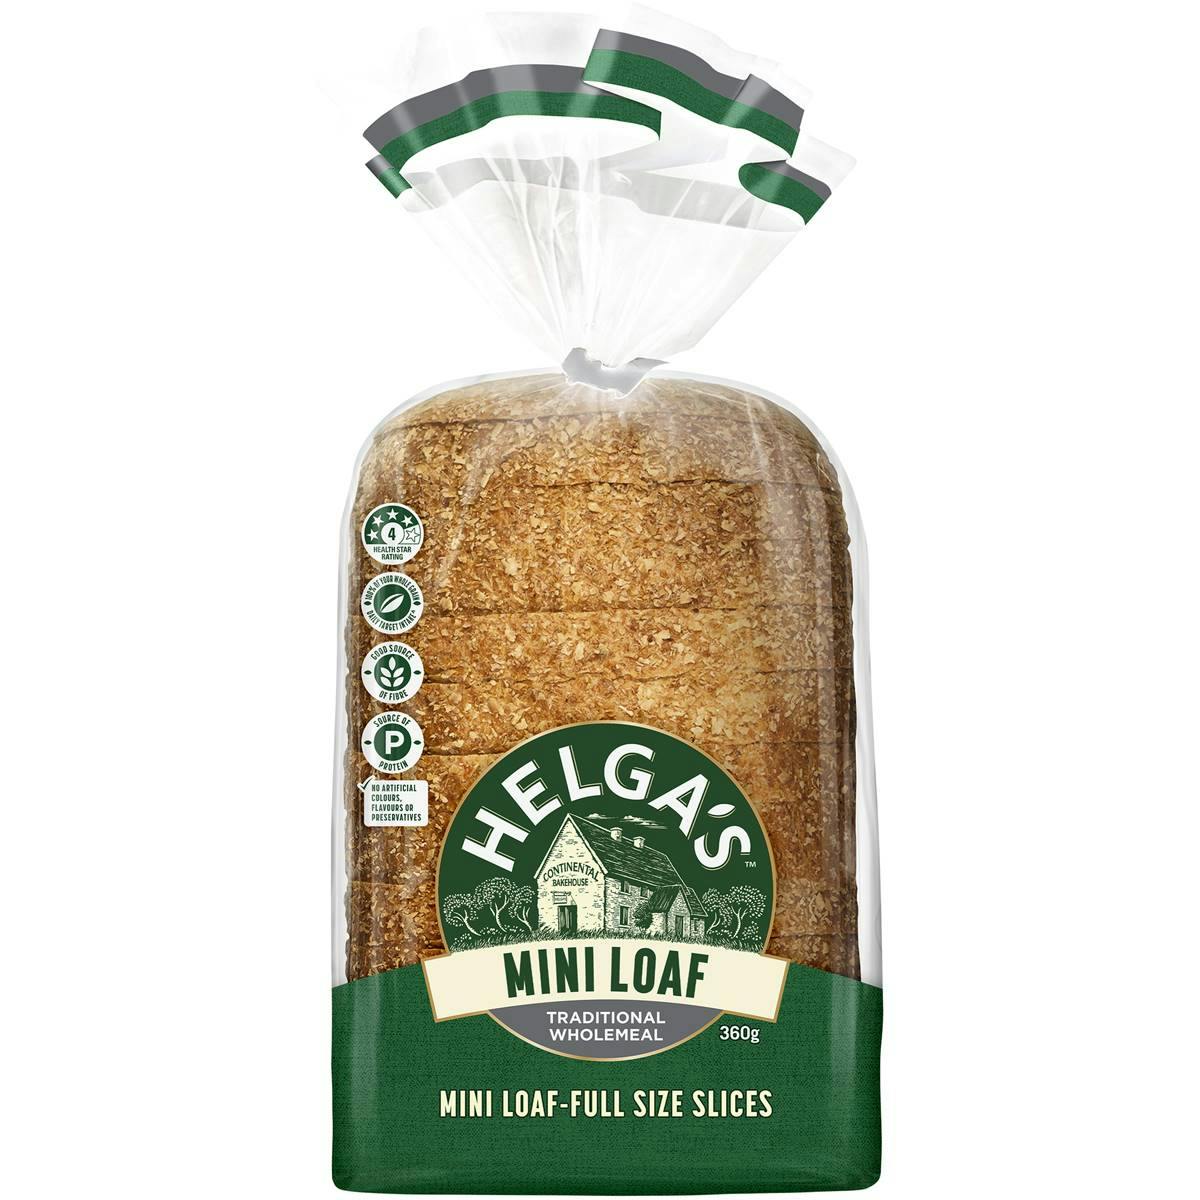 Helga's Traditional Wholemeal Mini Loaf